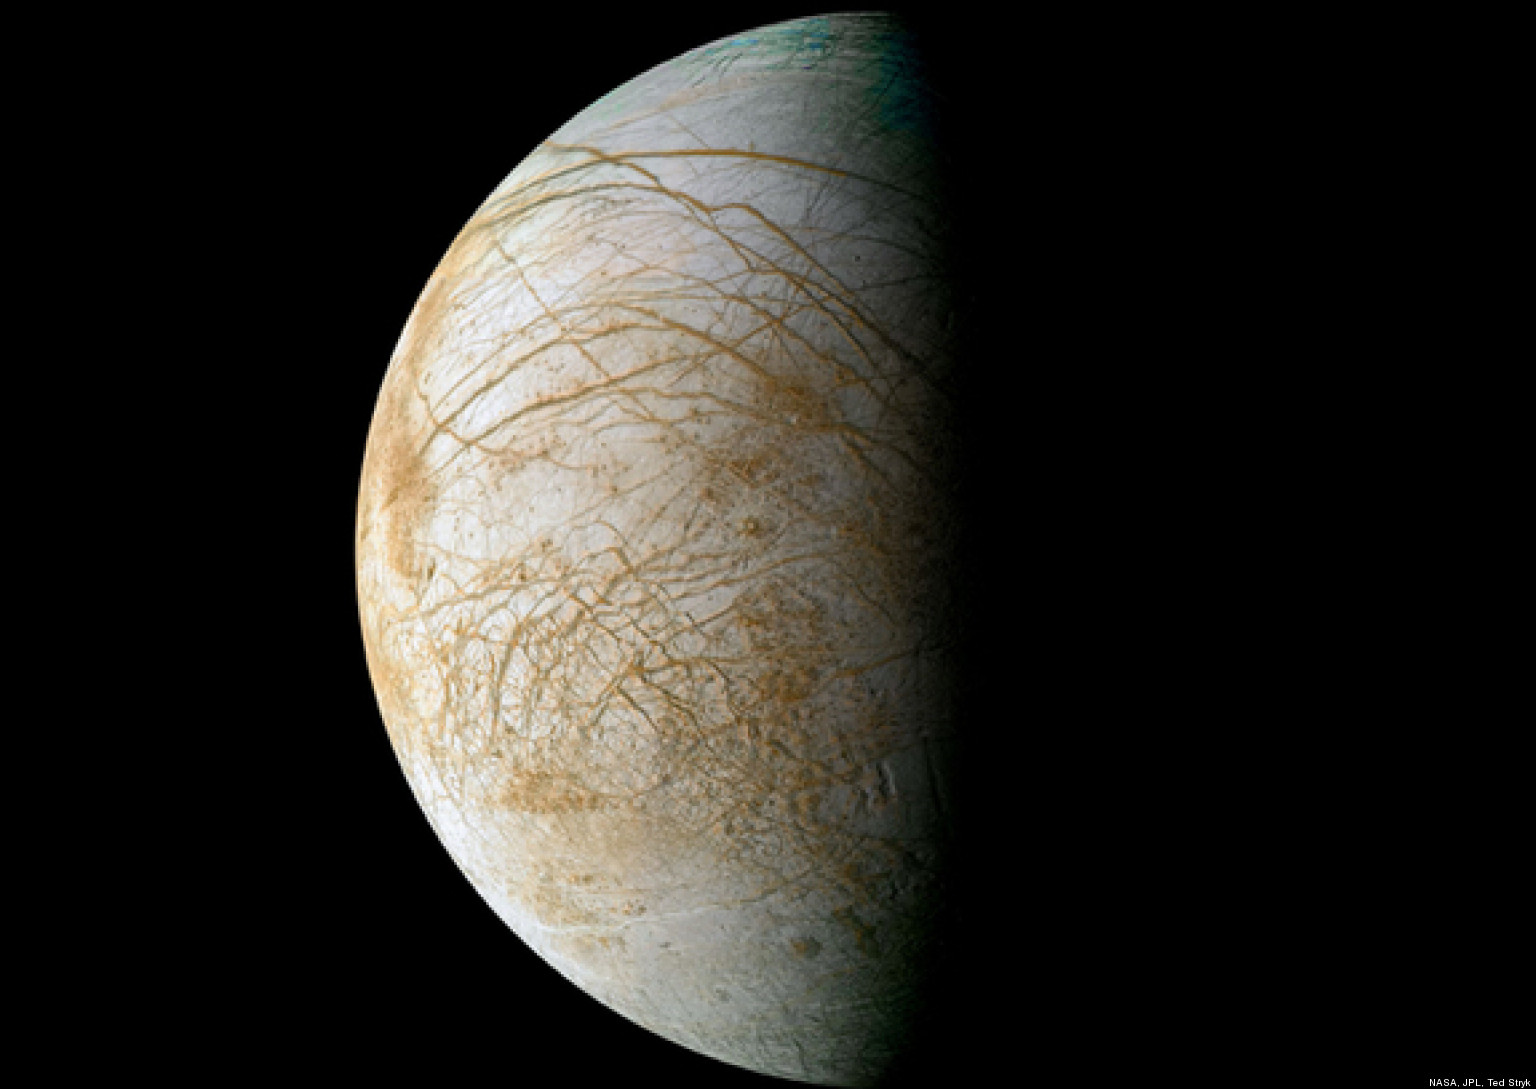 NASA Eyes Mission To Europa To Gauge Habitability Of Icy Jupiter Moon